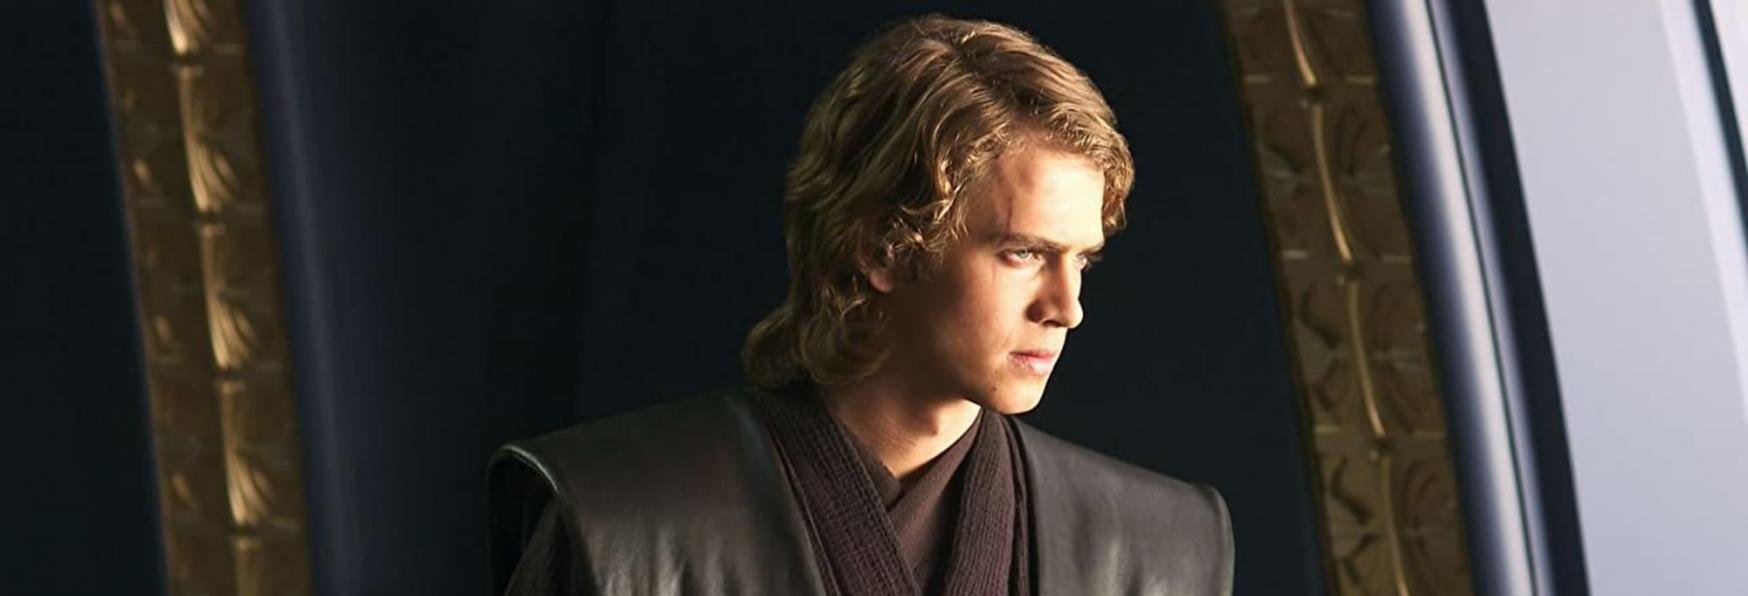 Obi-Wan Kenobi: lo Scrittore spiega la Rivelazione su Anakin Skywalker